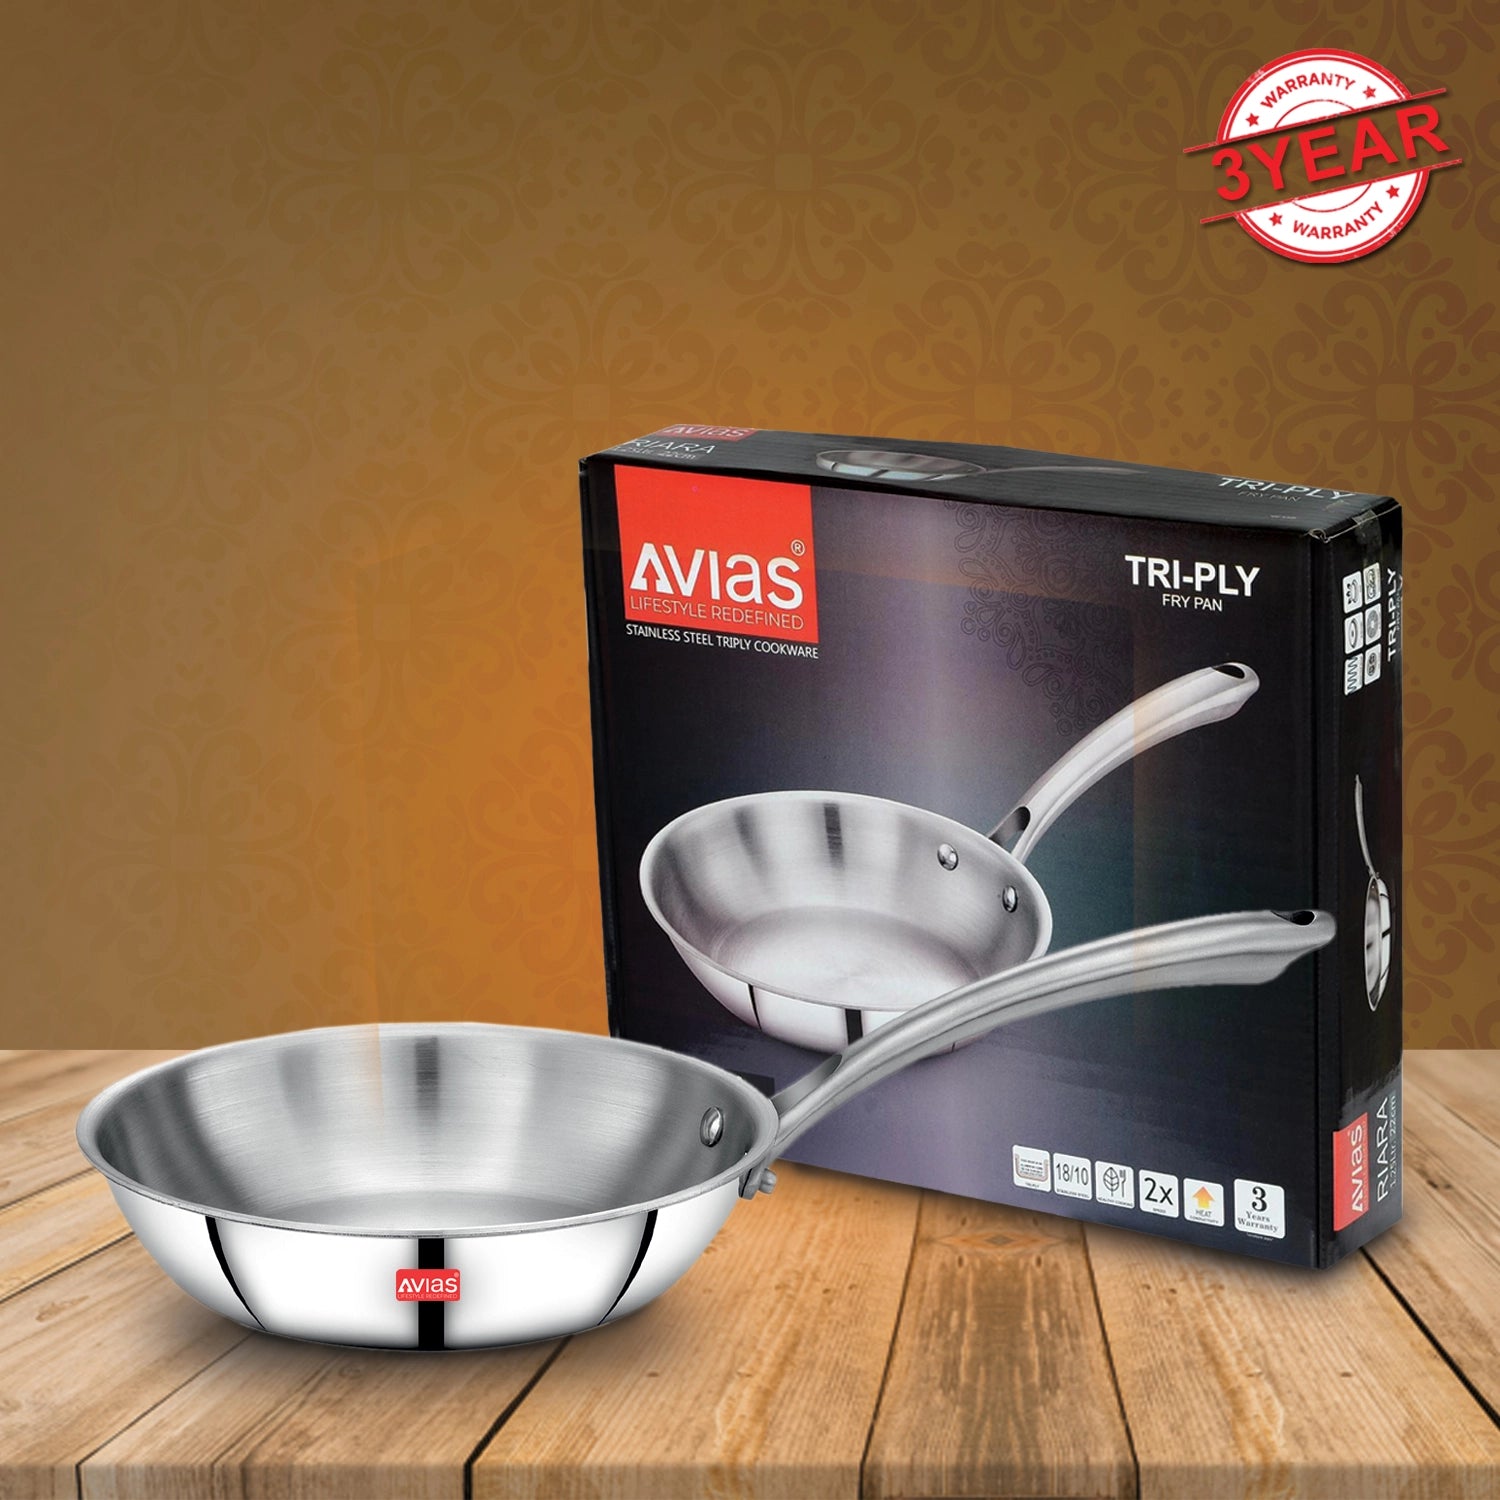 AVIAS Riara premium stainless steel Triply Fry pan package